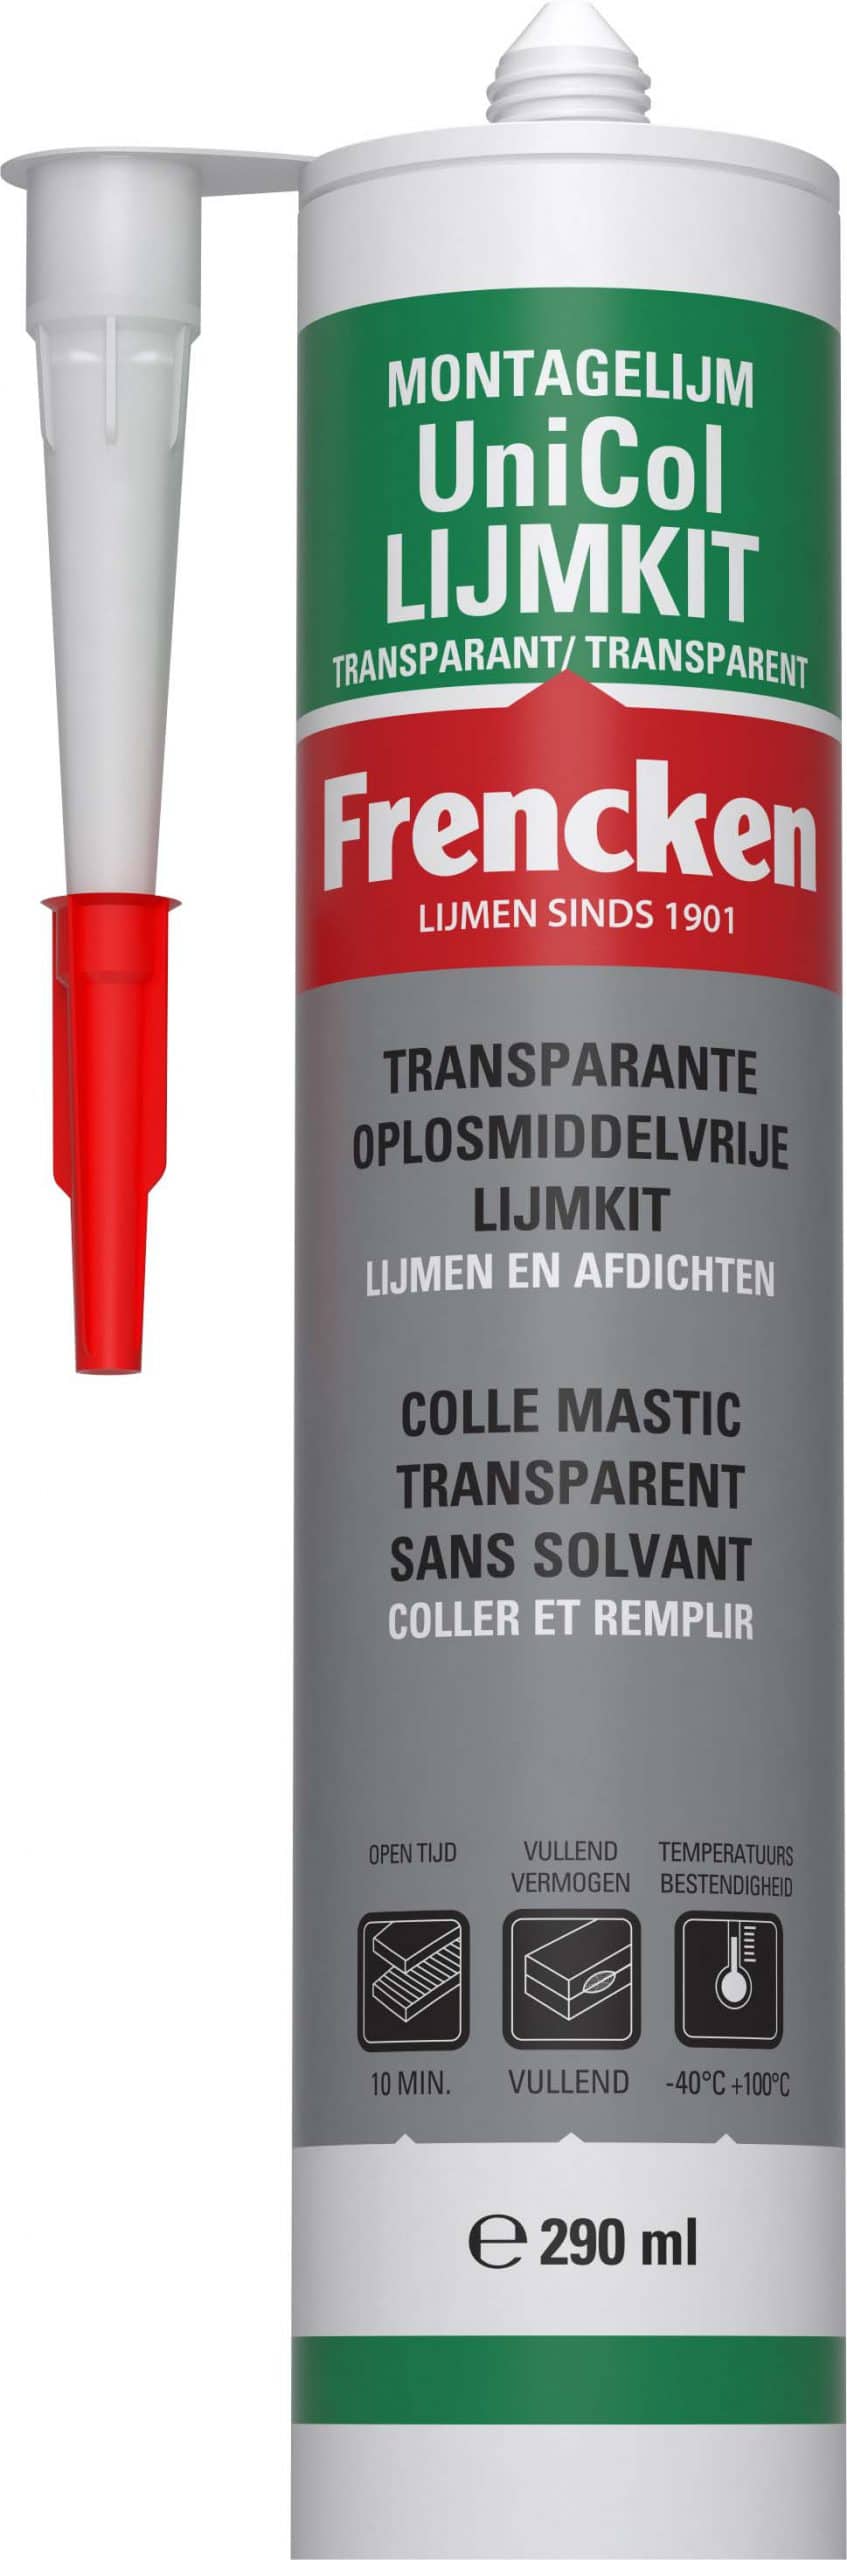 transparante lijmkit van unicol in fles van 290 ml